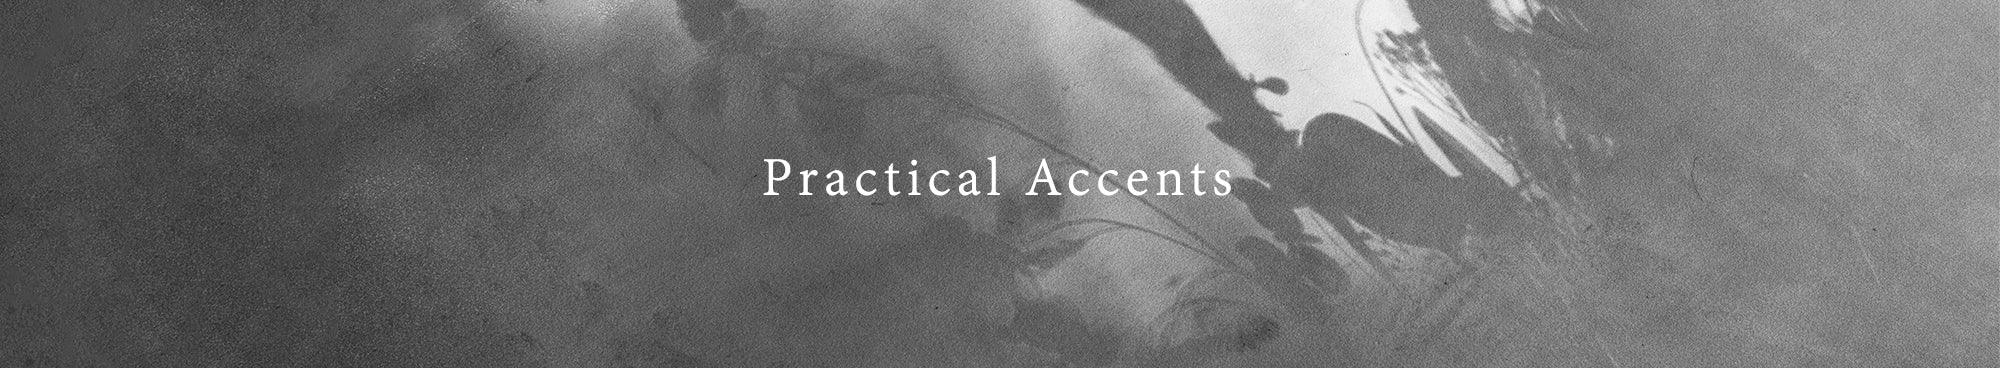 Practical Accents - Rikumo